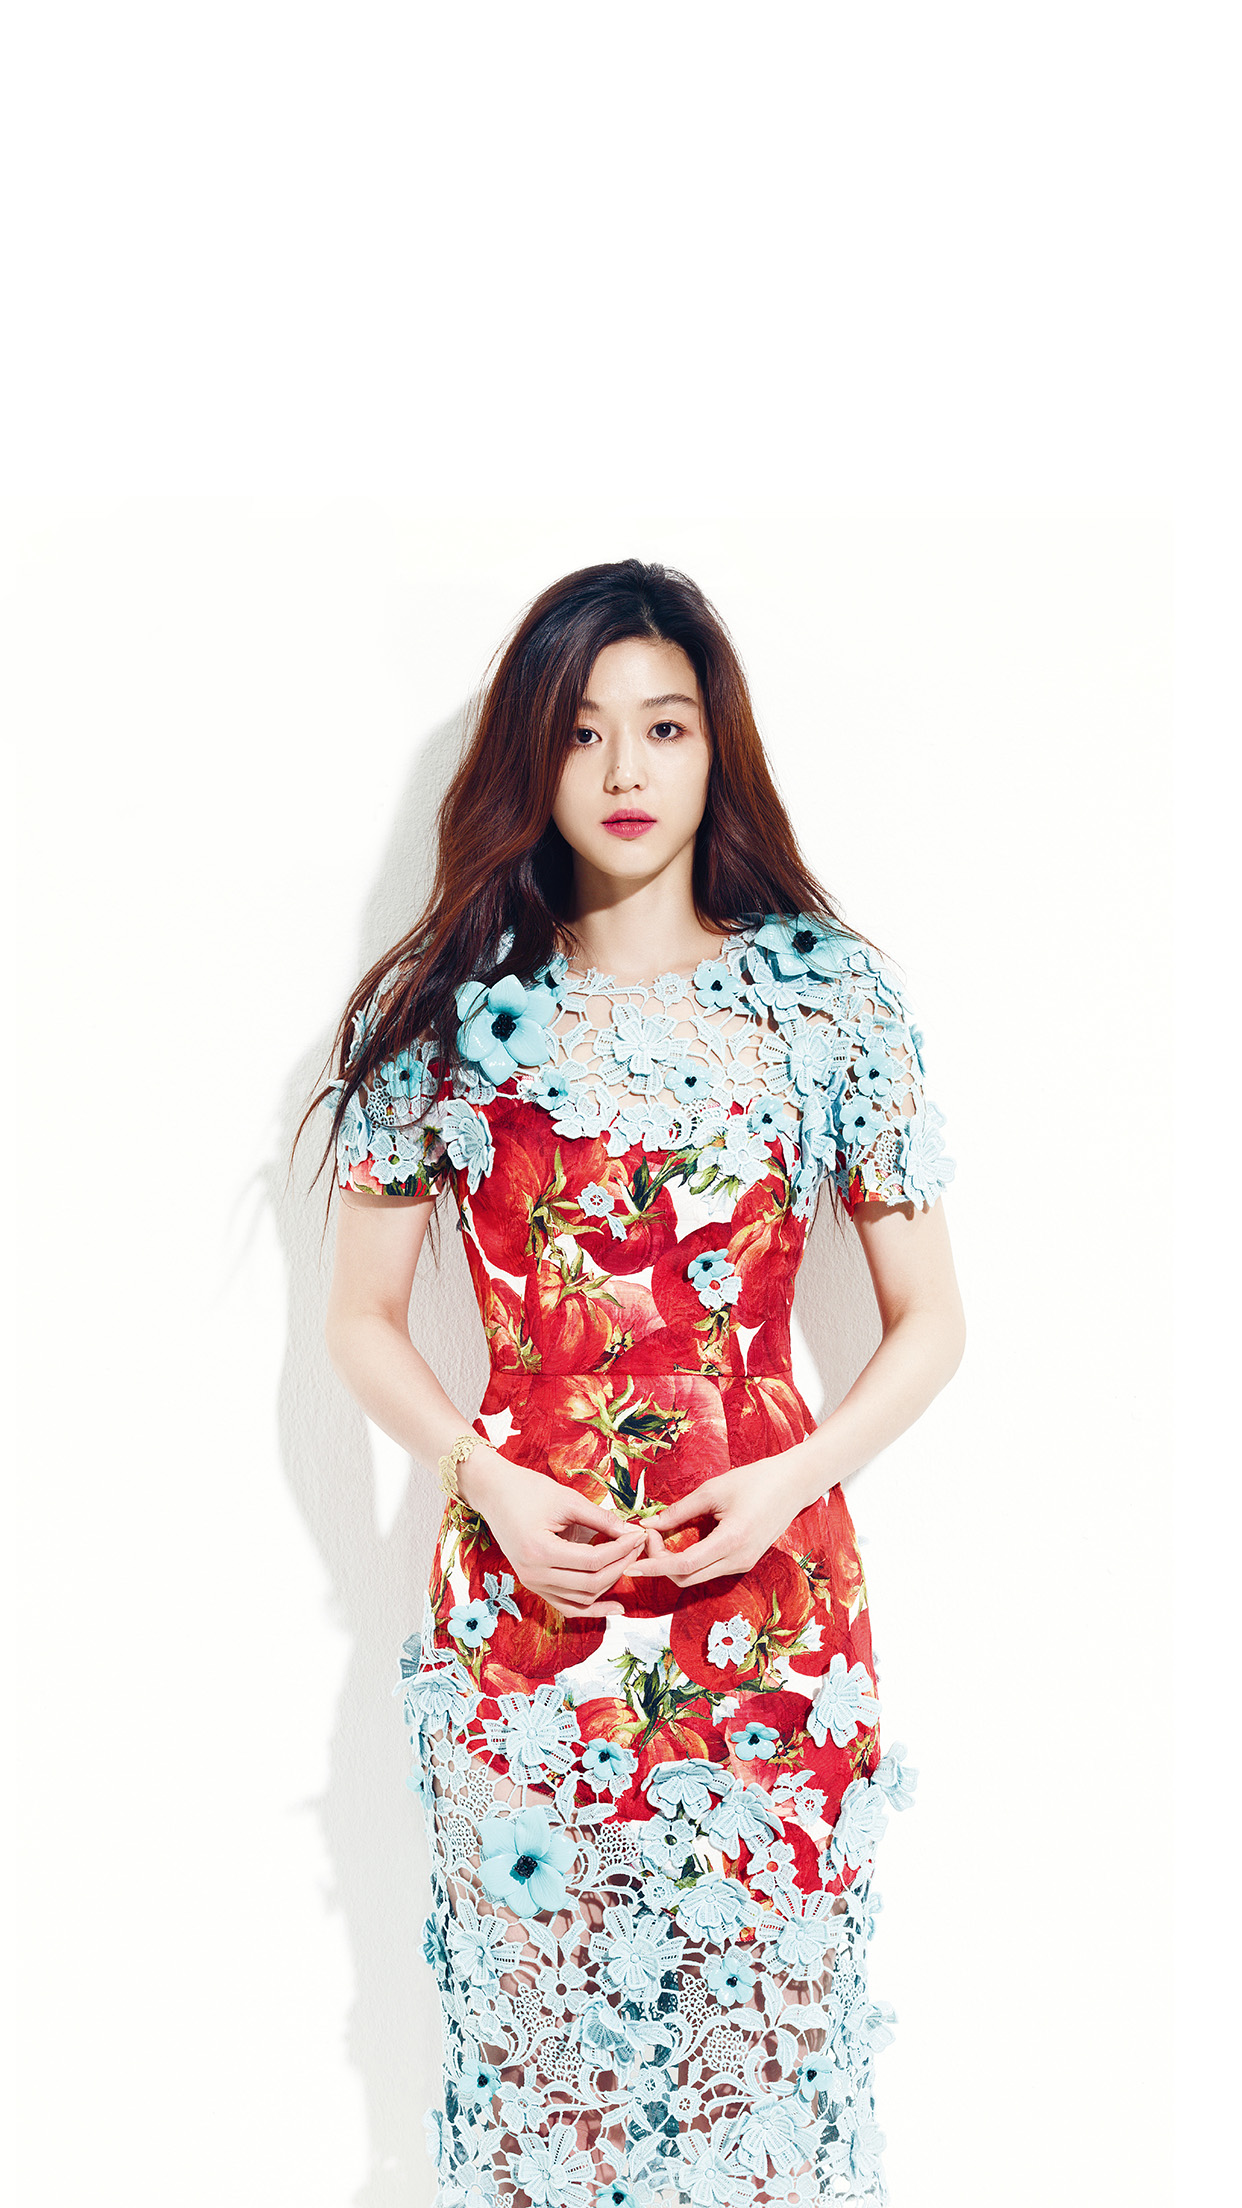 Jun Ji Hyun Actress Kpop Cute Beauty Celebrity Android wallpaper